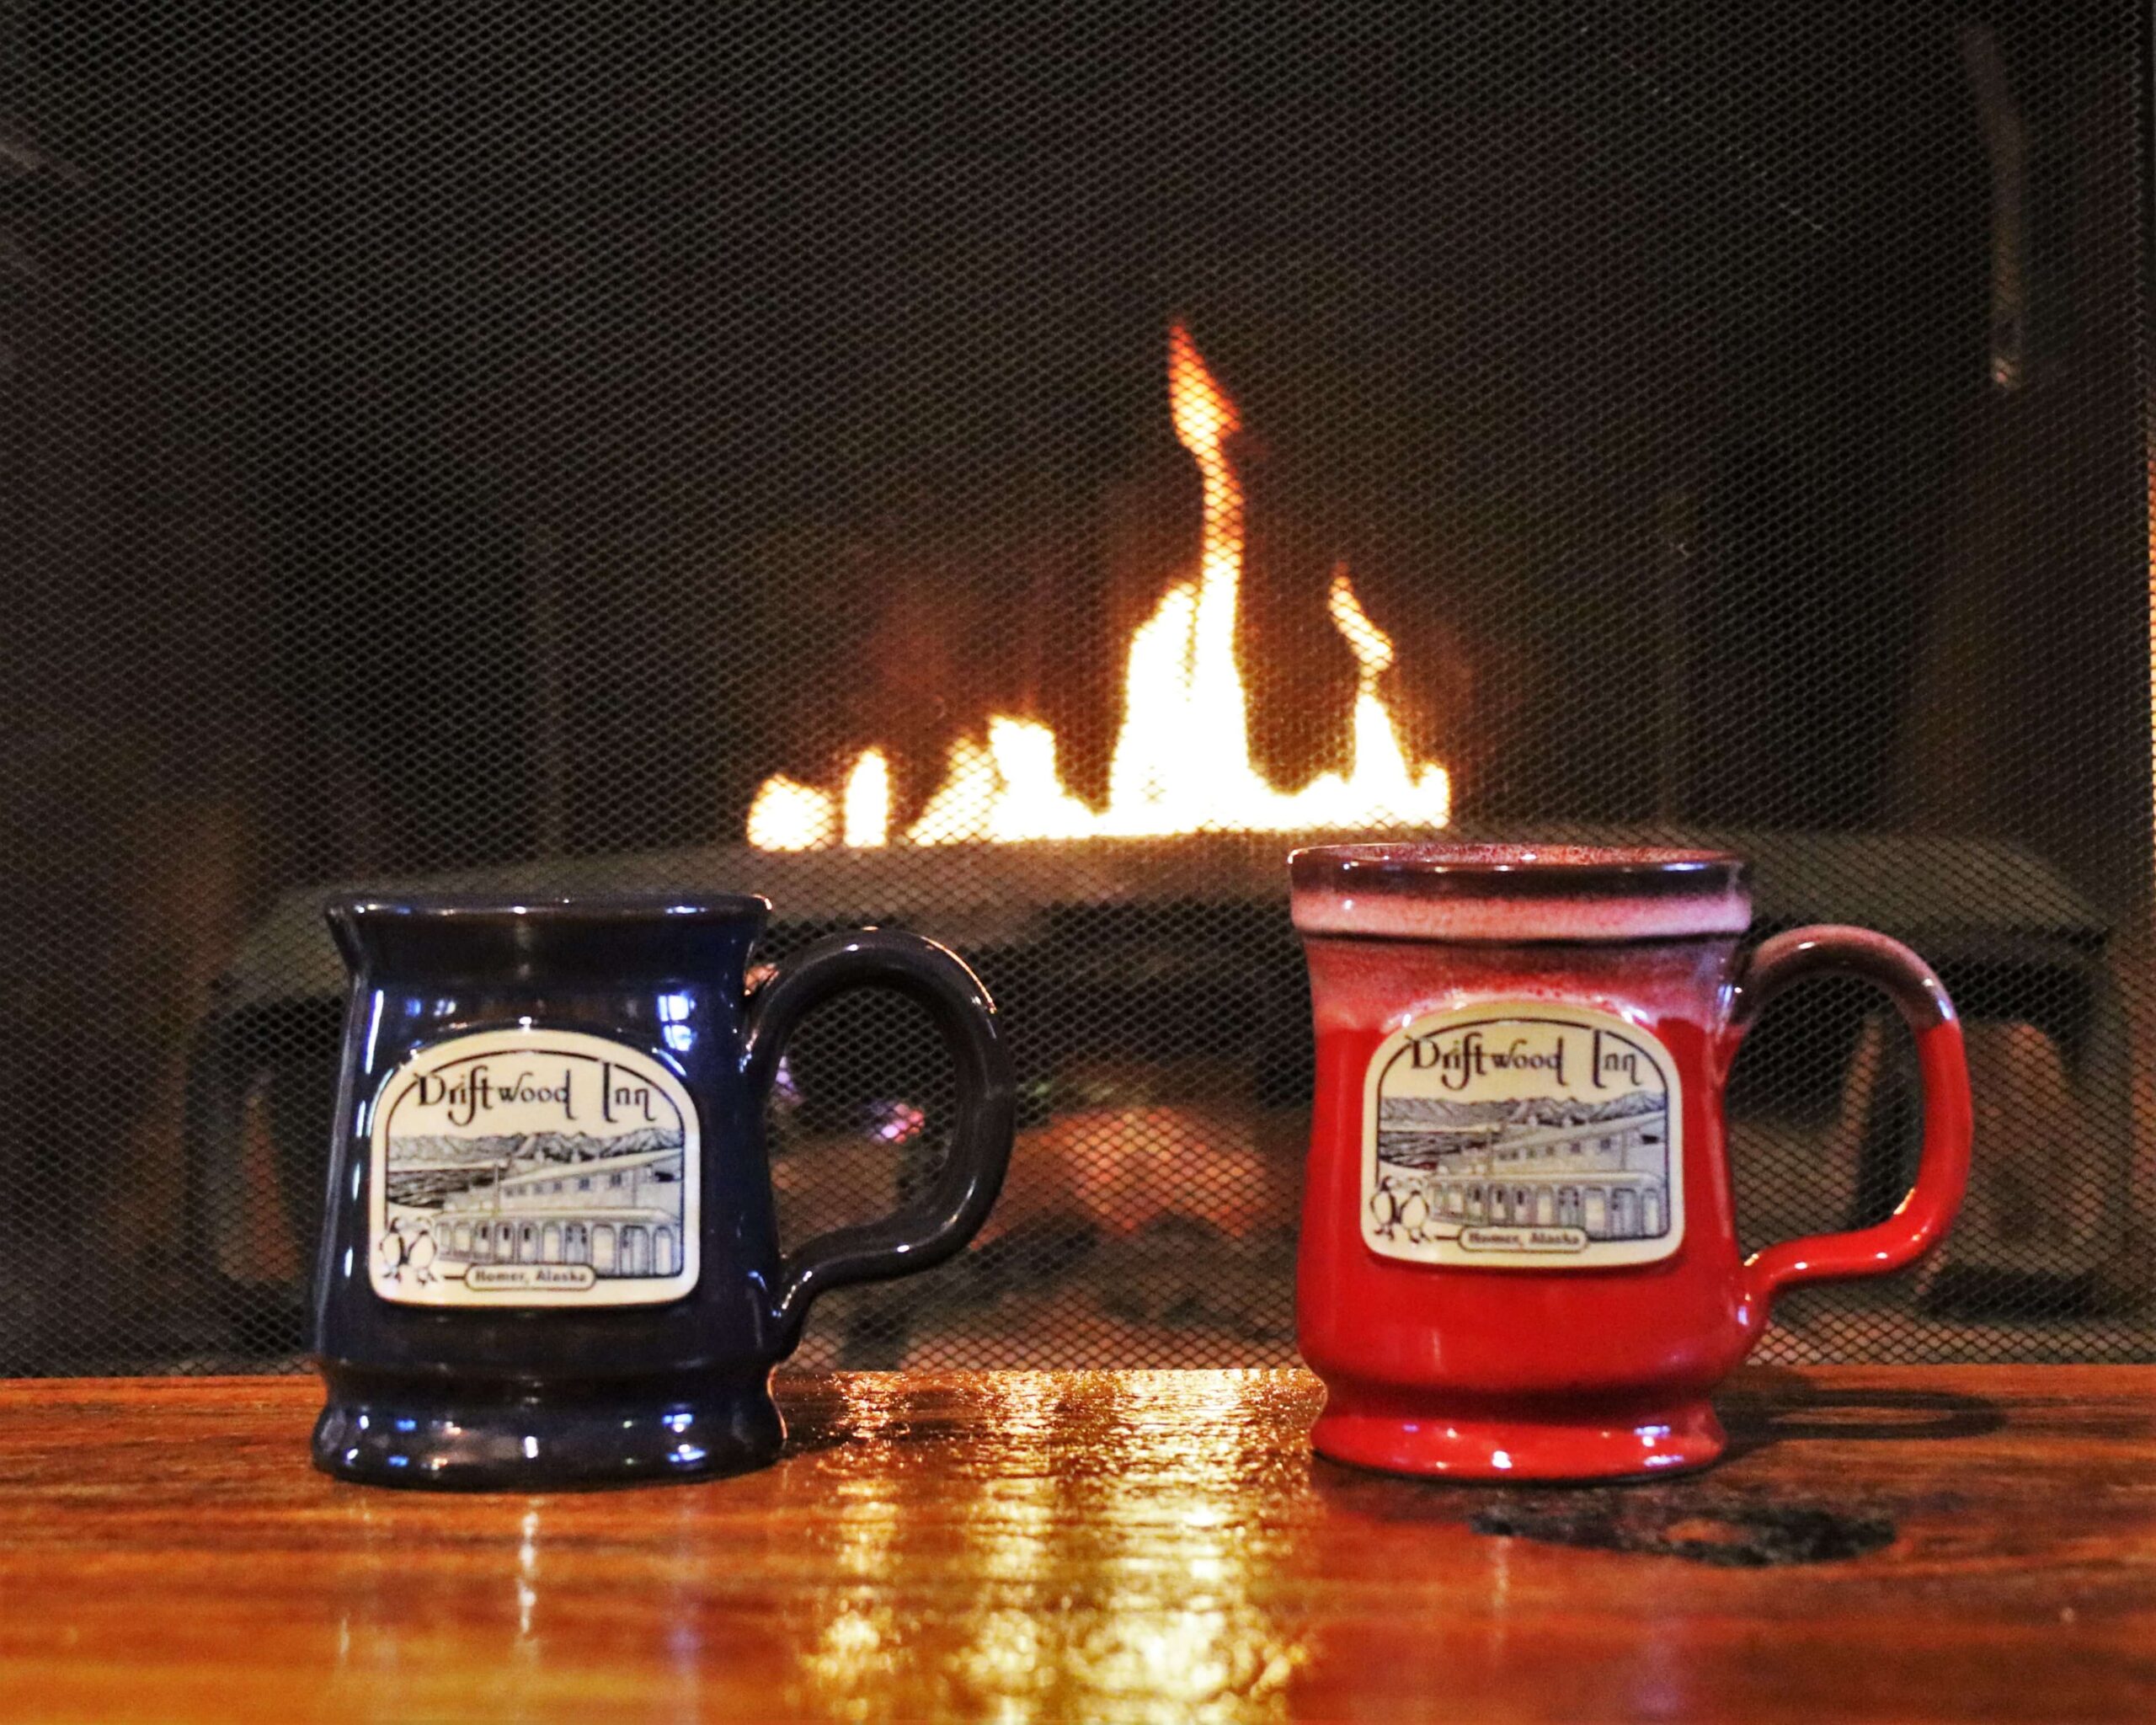 K-Bay Latte in a Souvenir Driftwood Inn Mug